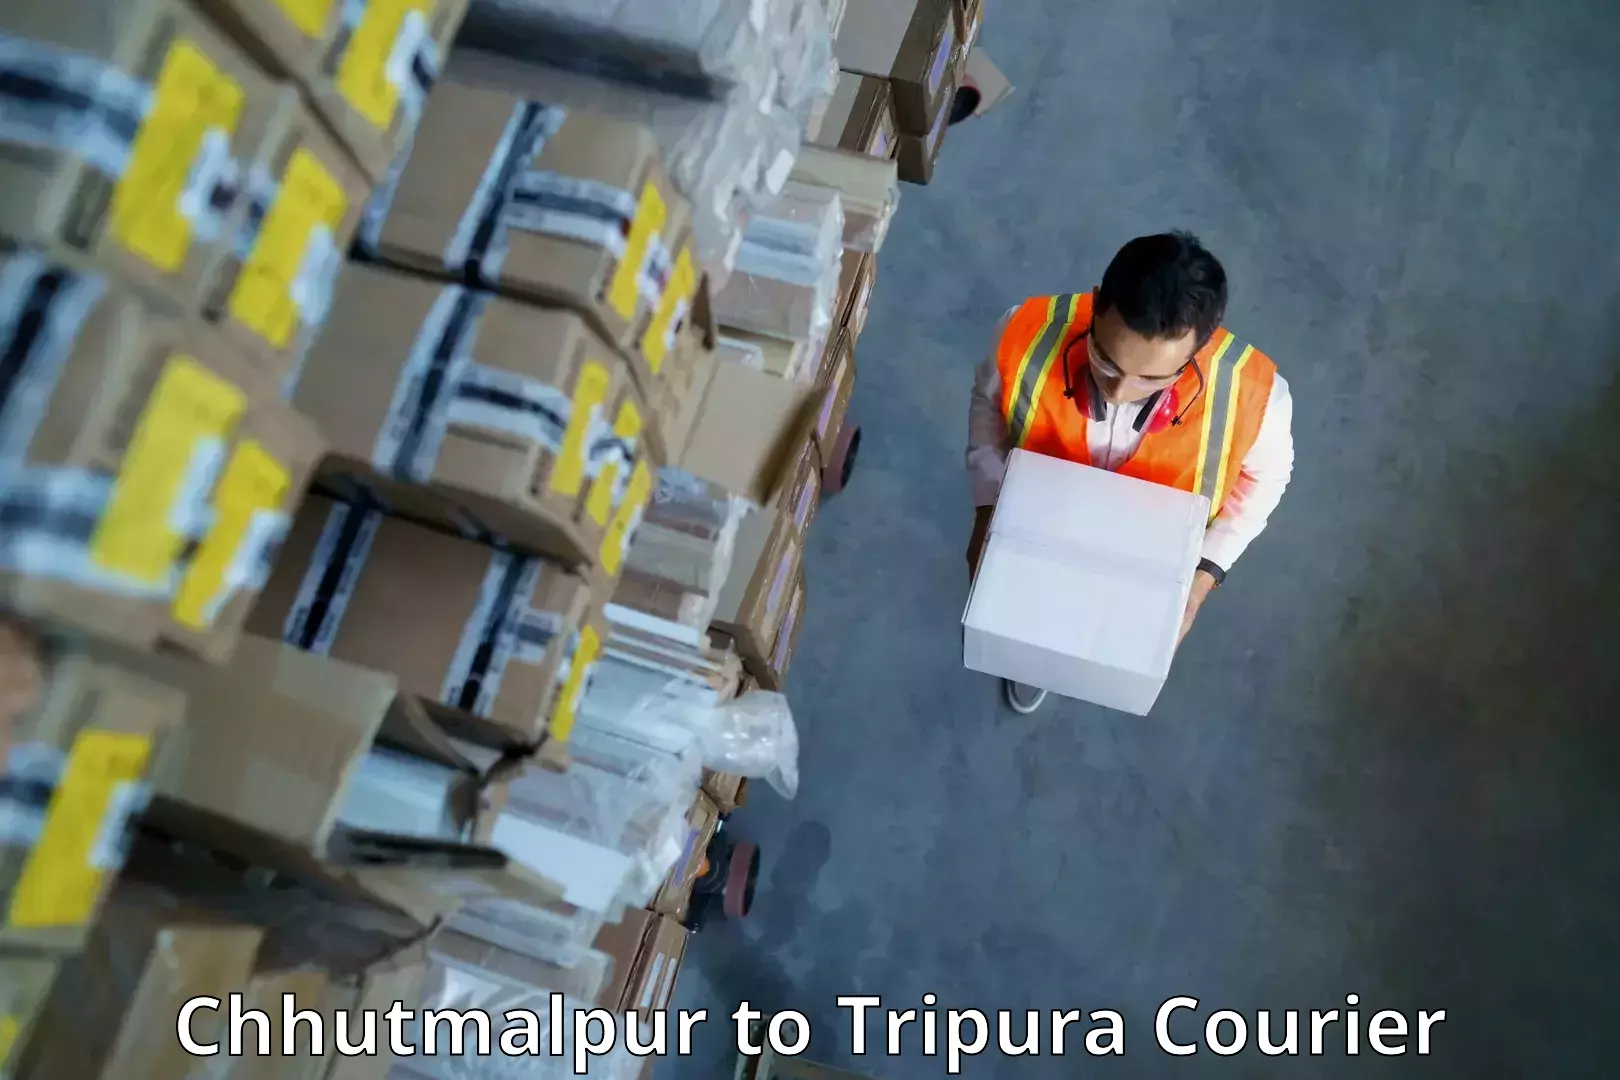 On-call courier service Chhutmalpur to Ambassa